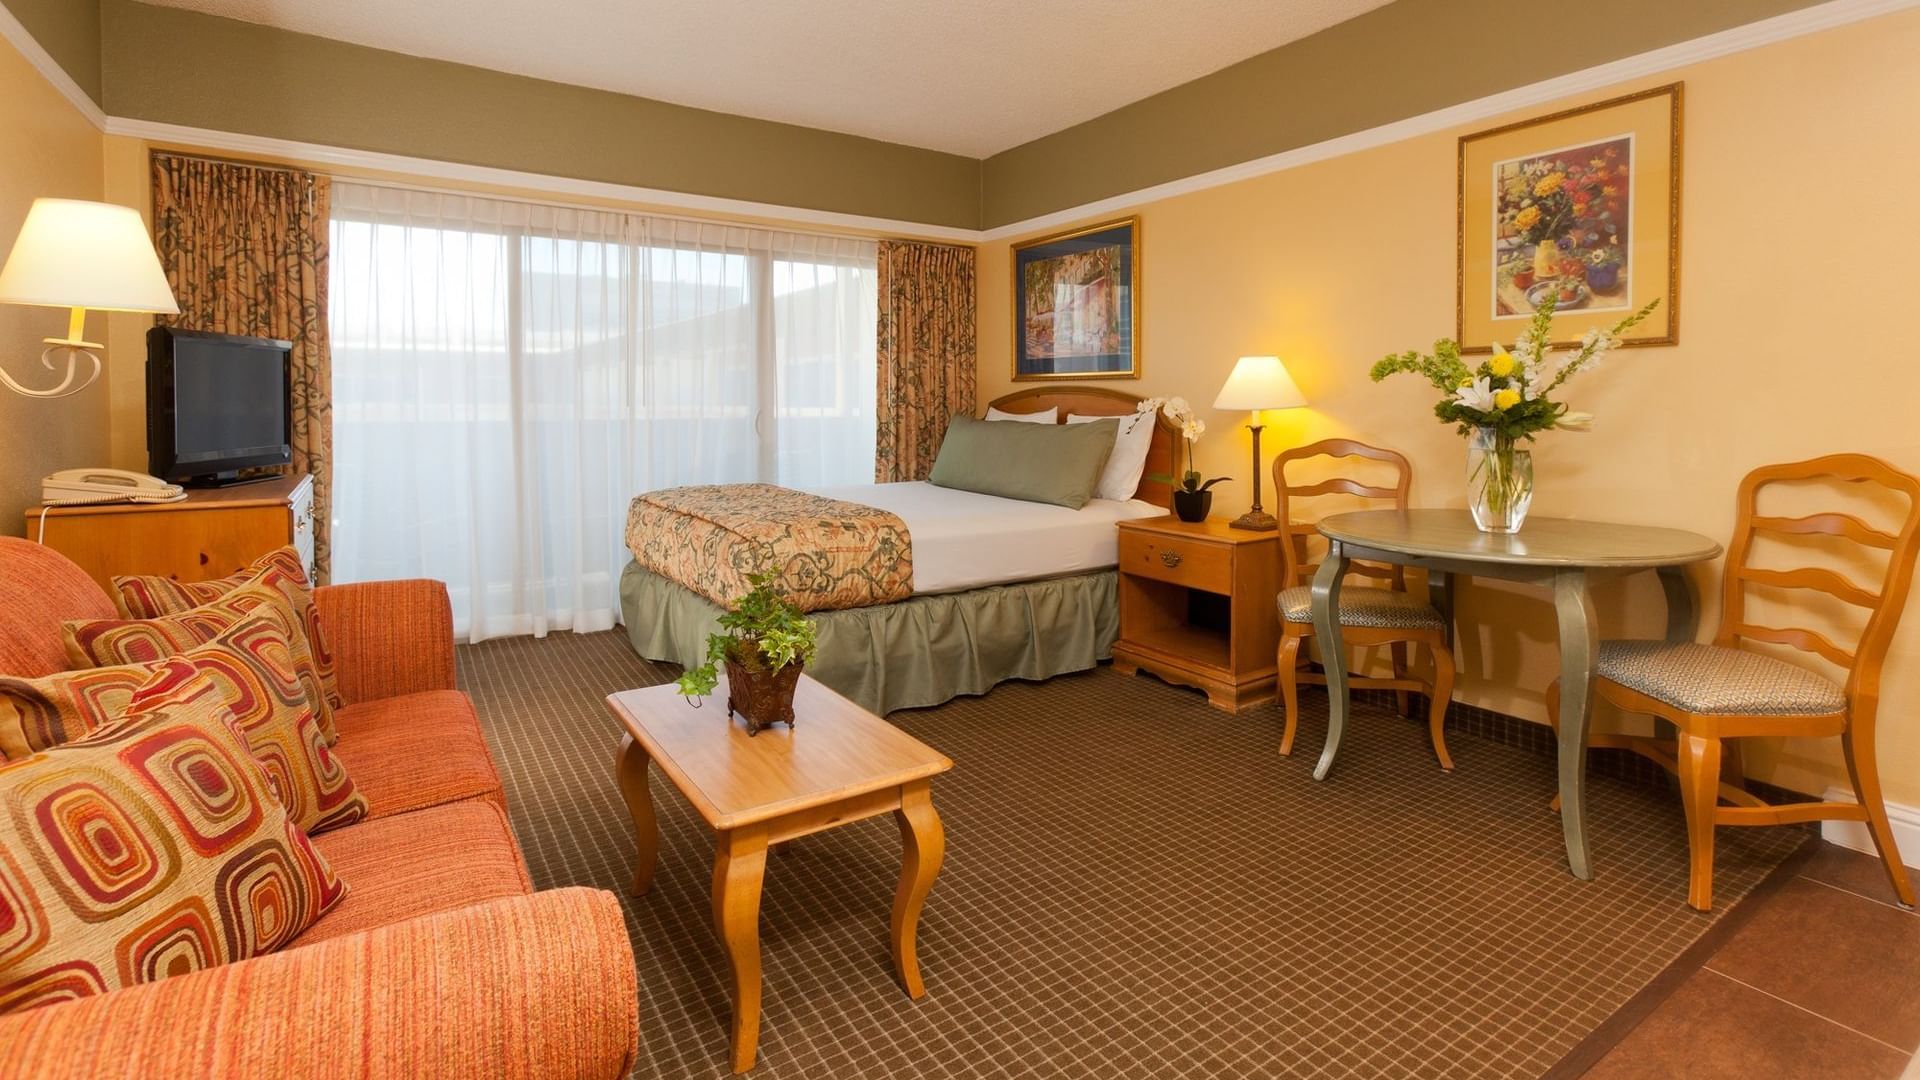  Interior view of a bedroom at Legacy Vacation Resorts 